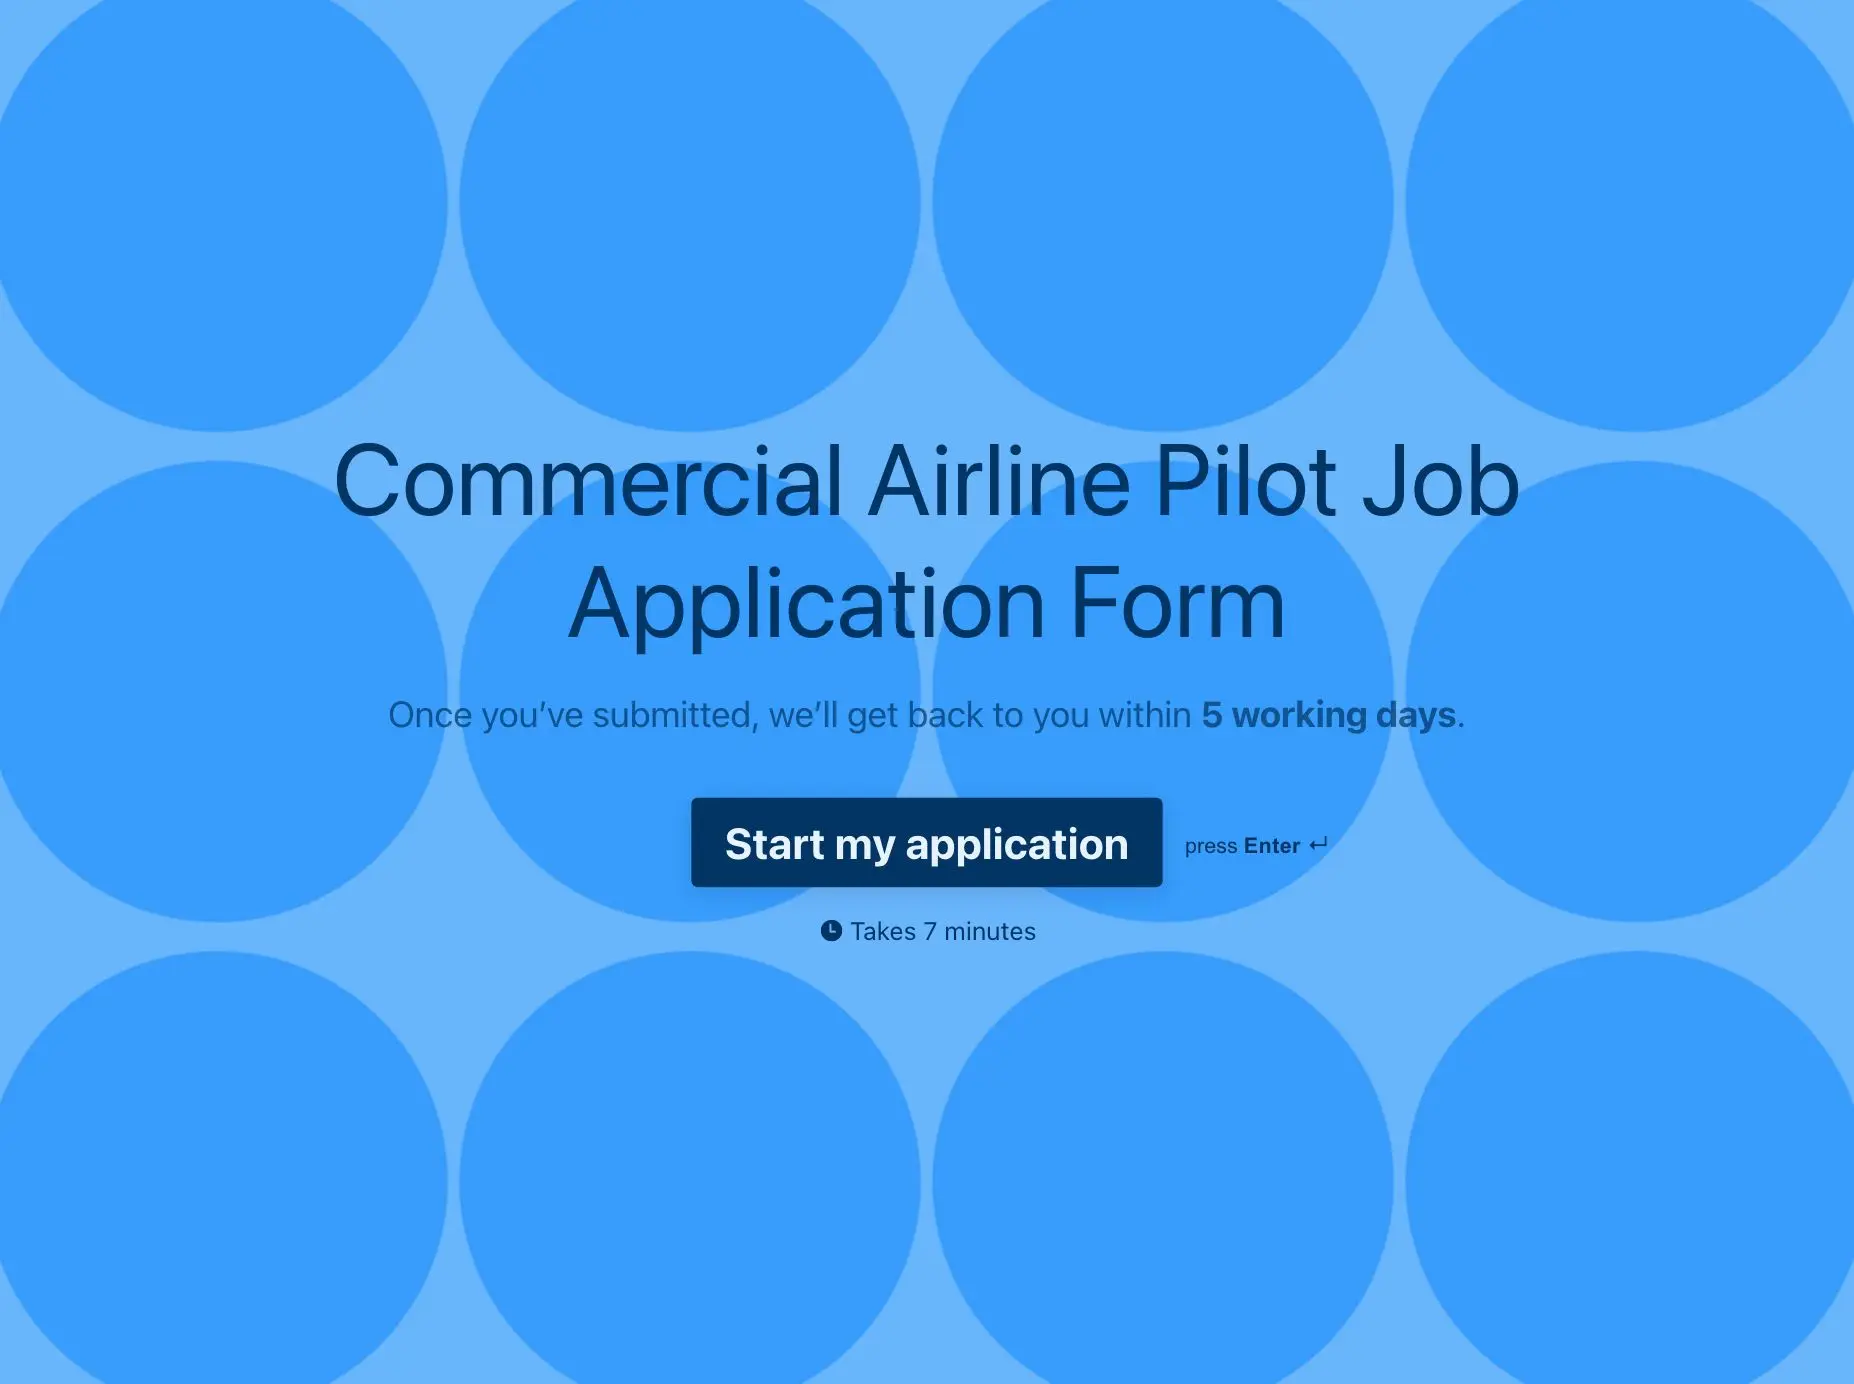 Commercial Airline Pilot Job Application Form Template Hero